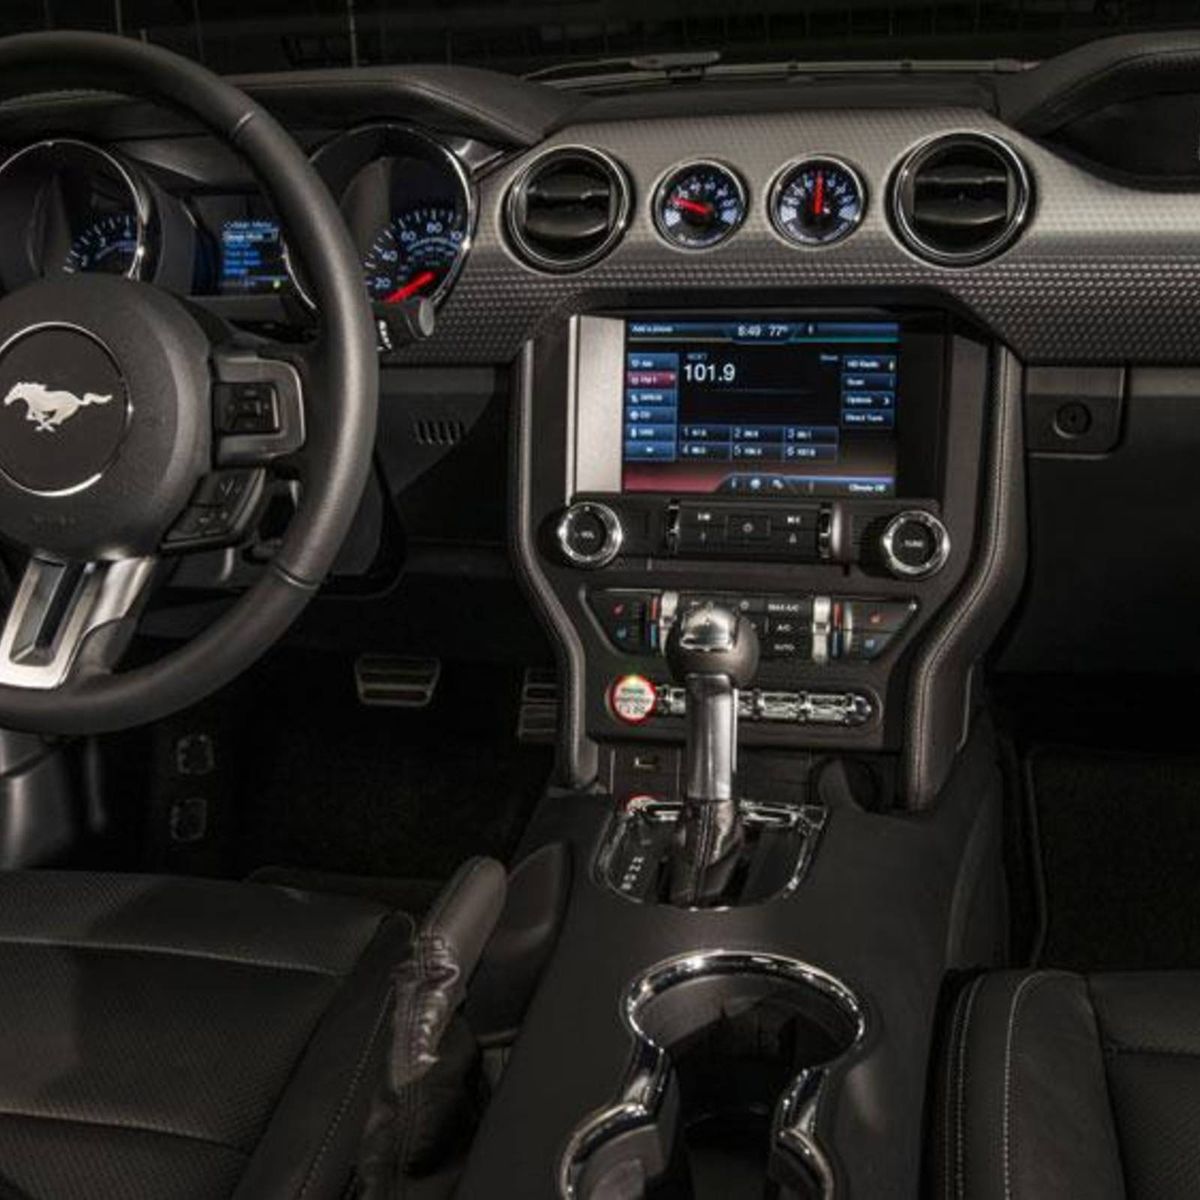 New Mustang Interior Grows Up